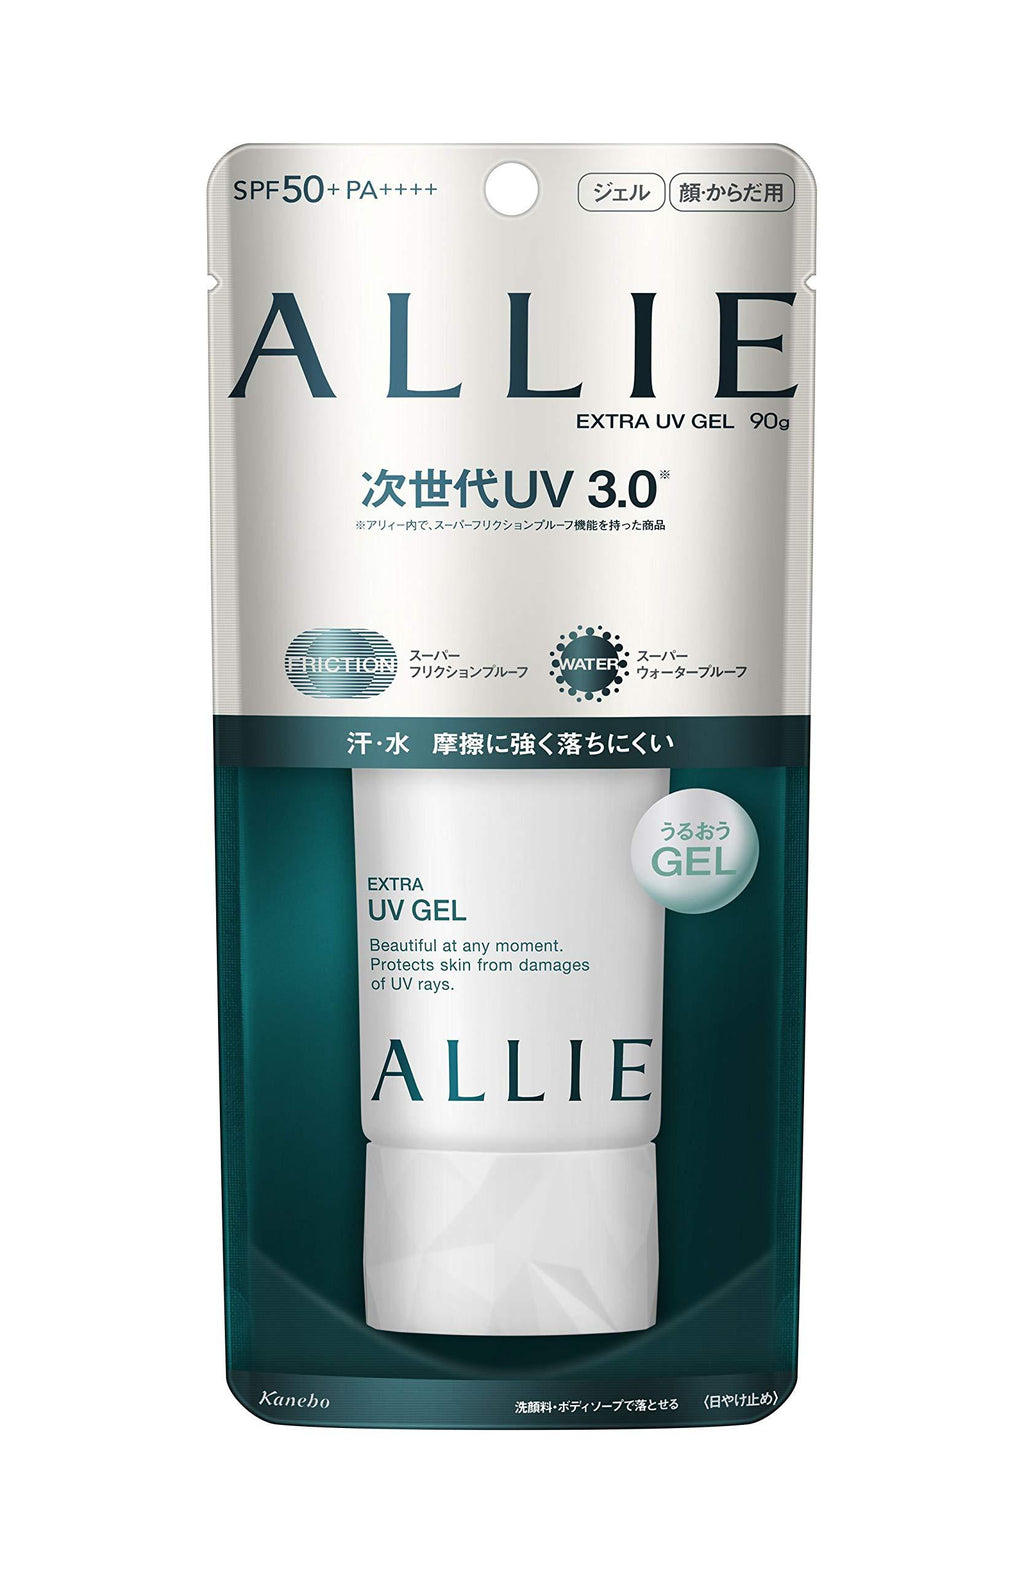 [Australia] - Kanebo ALLIE Extra UV Gel Sunscreen - SPF50+ PA++++ 90g / 3.1oz | NEW 2018 3.0 UV Gel 90g (2020) 